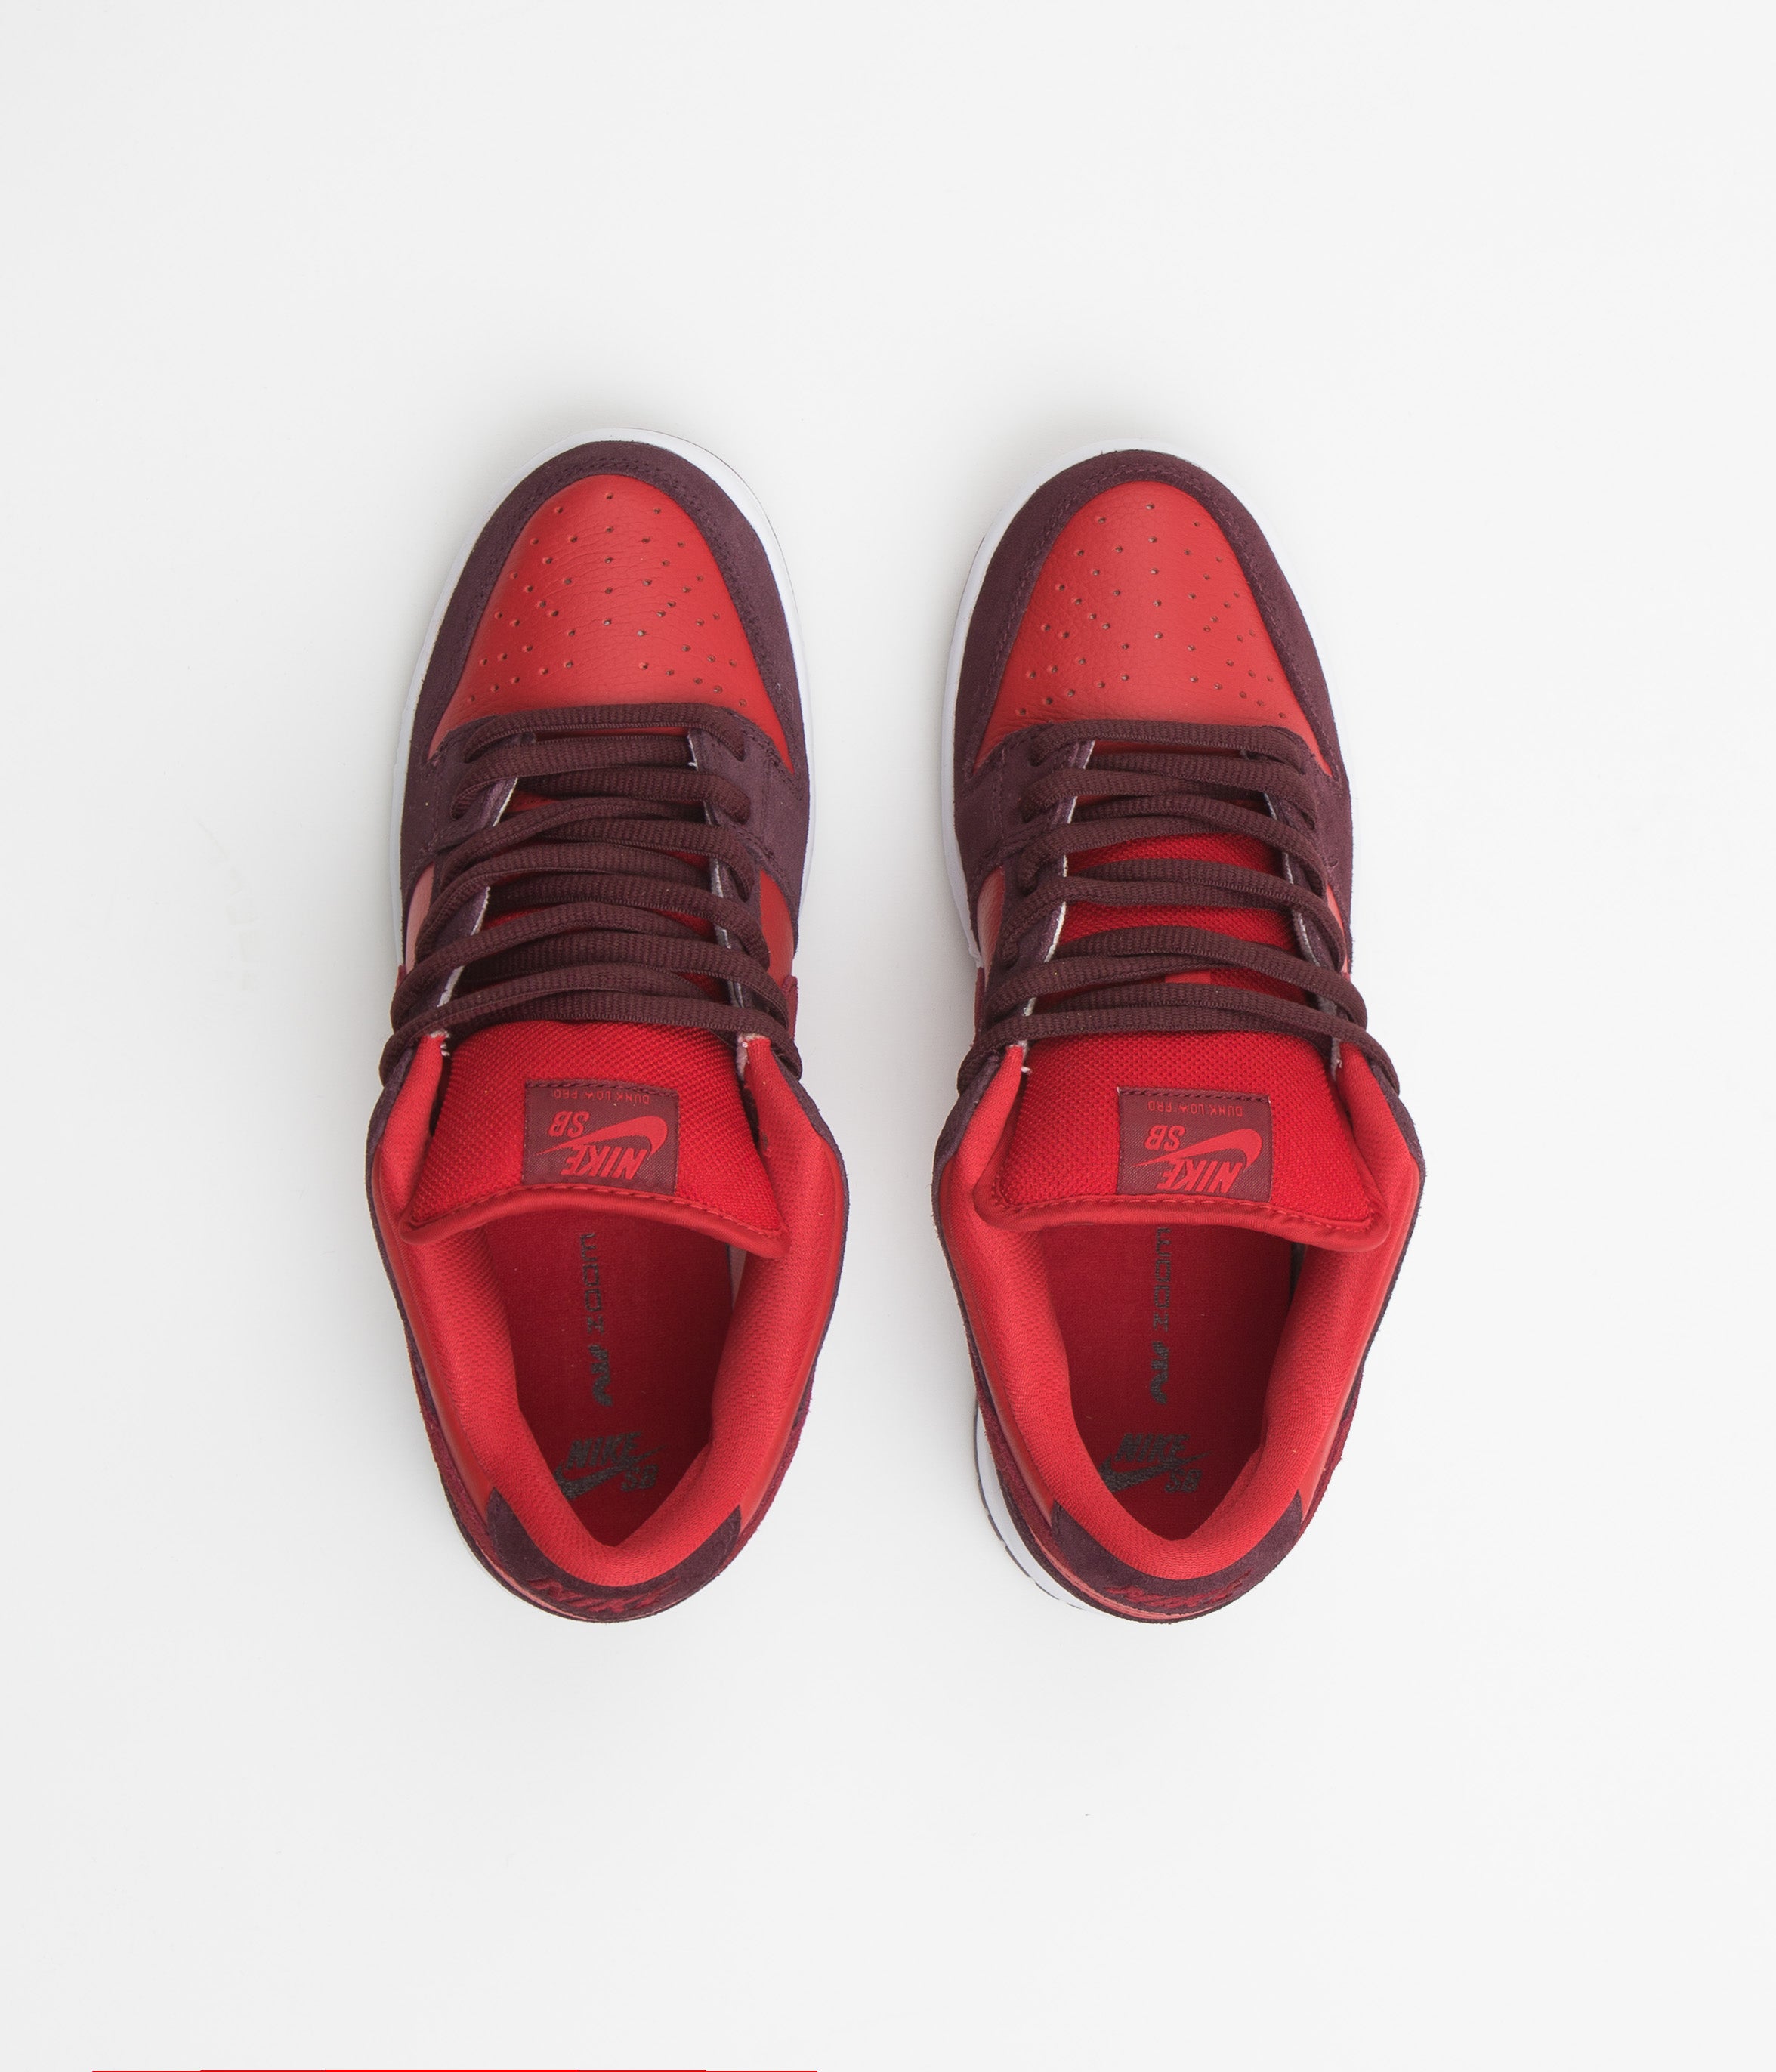 Nike SB Dunk Low Pro Cherry Shoes - Burgundy Crush / Team Red - Univer ...